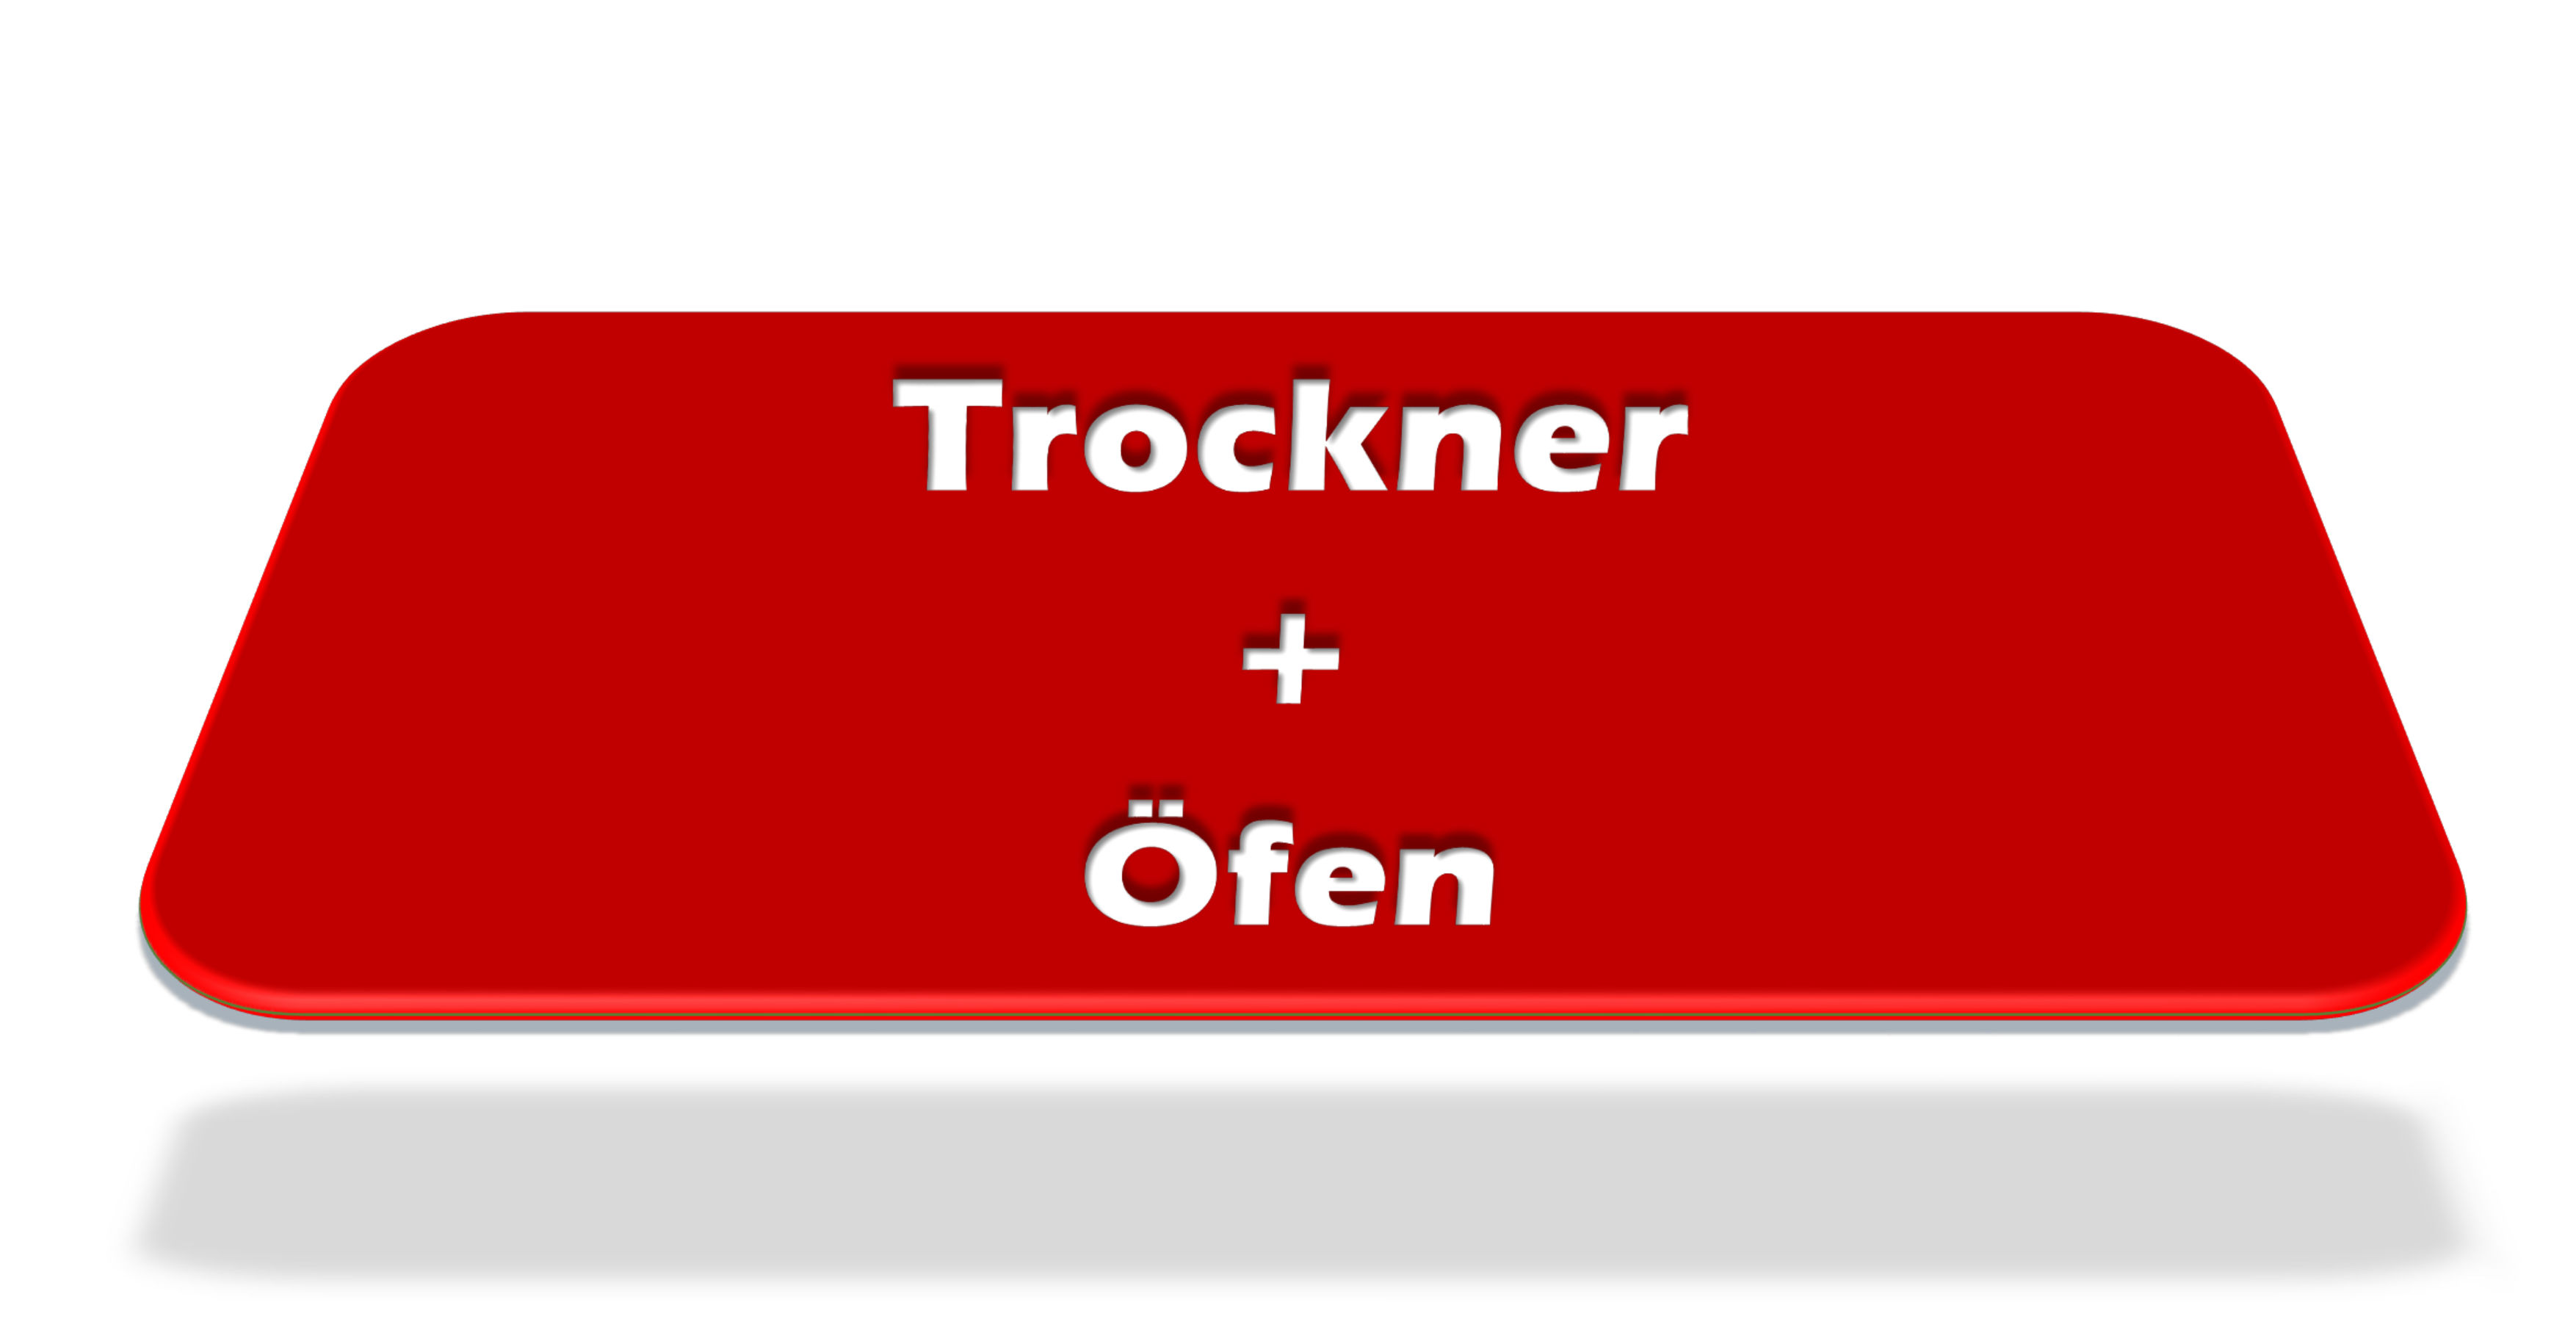 Trockner